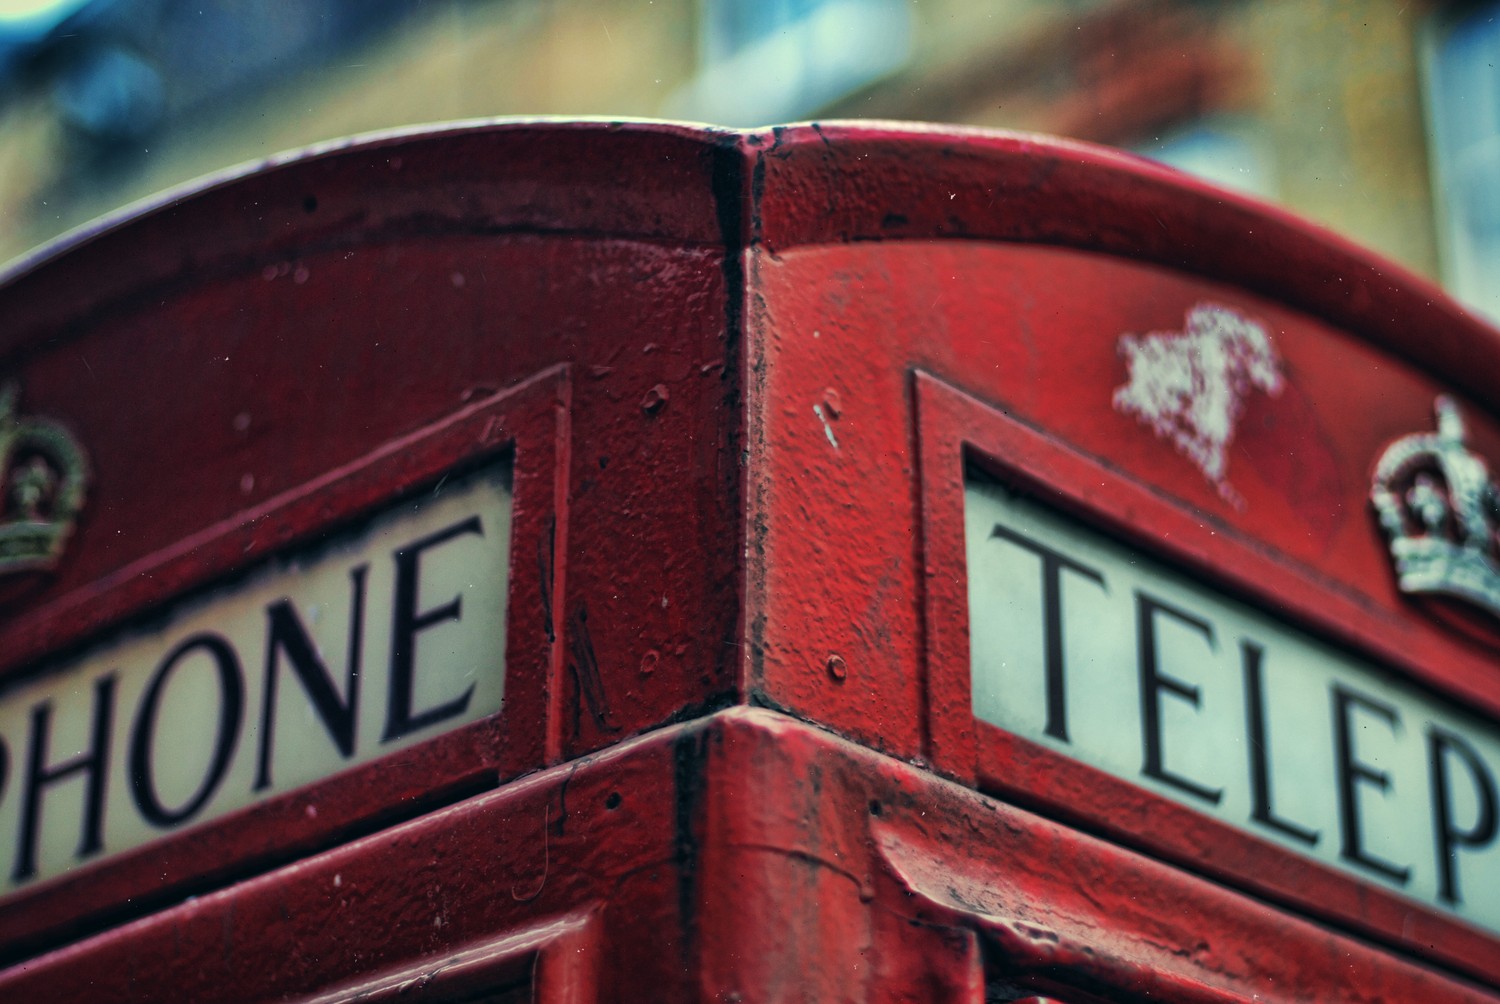 Month away. Шаблон телефонной будки Англии. Номер телефона Лондон. Корона на телефонной будке Лондона штамп. London is Red.